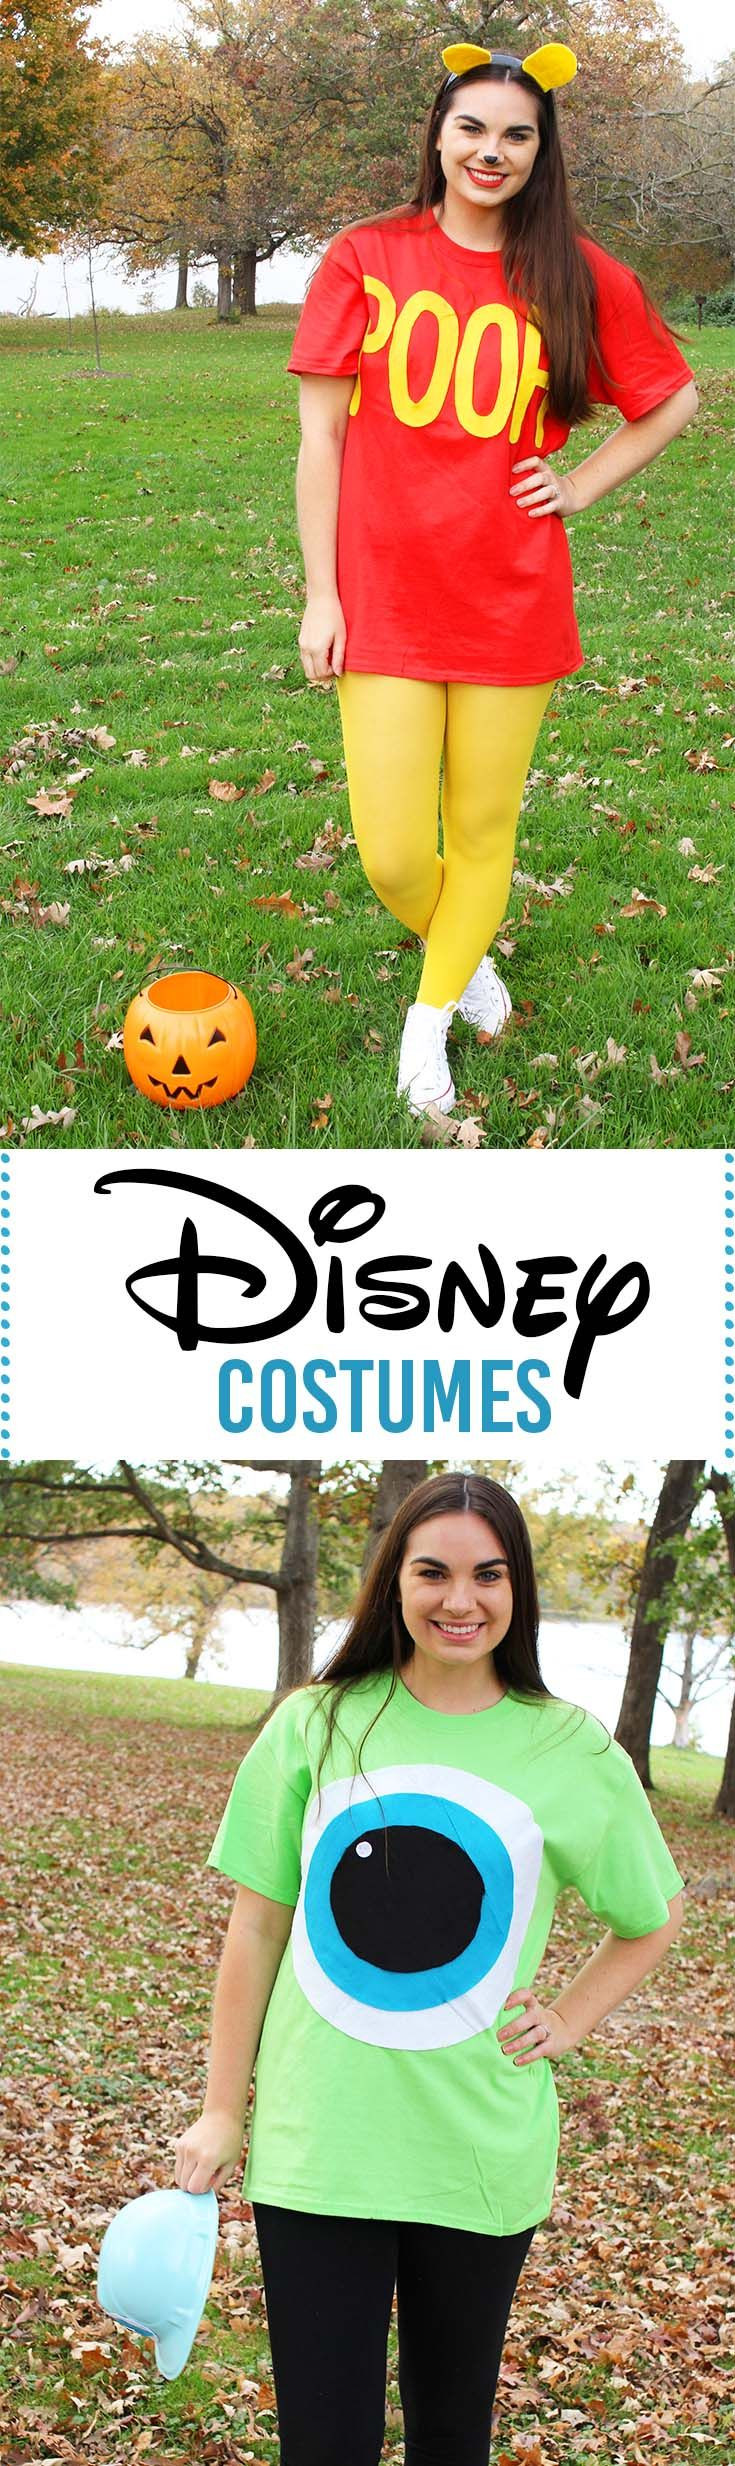 Best ideas about DIY Cartoon Costumes
. Save or Pin 25 bästa idéerna om Easy disney costumes på Pinterest Now.